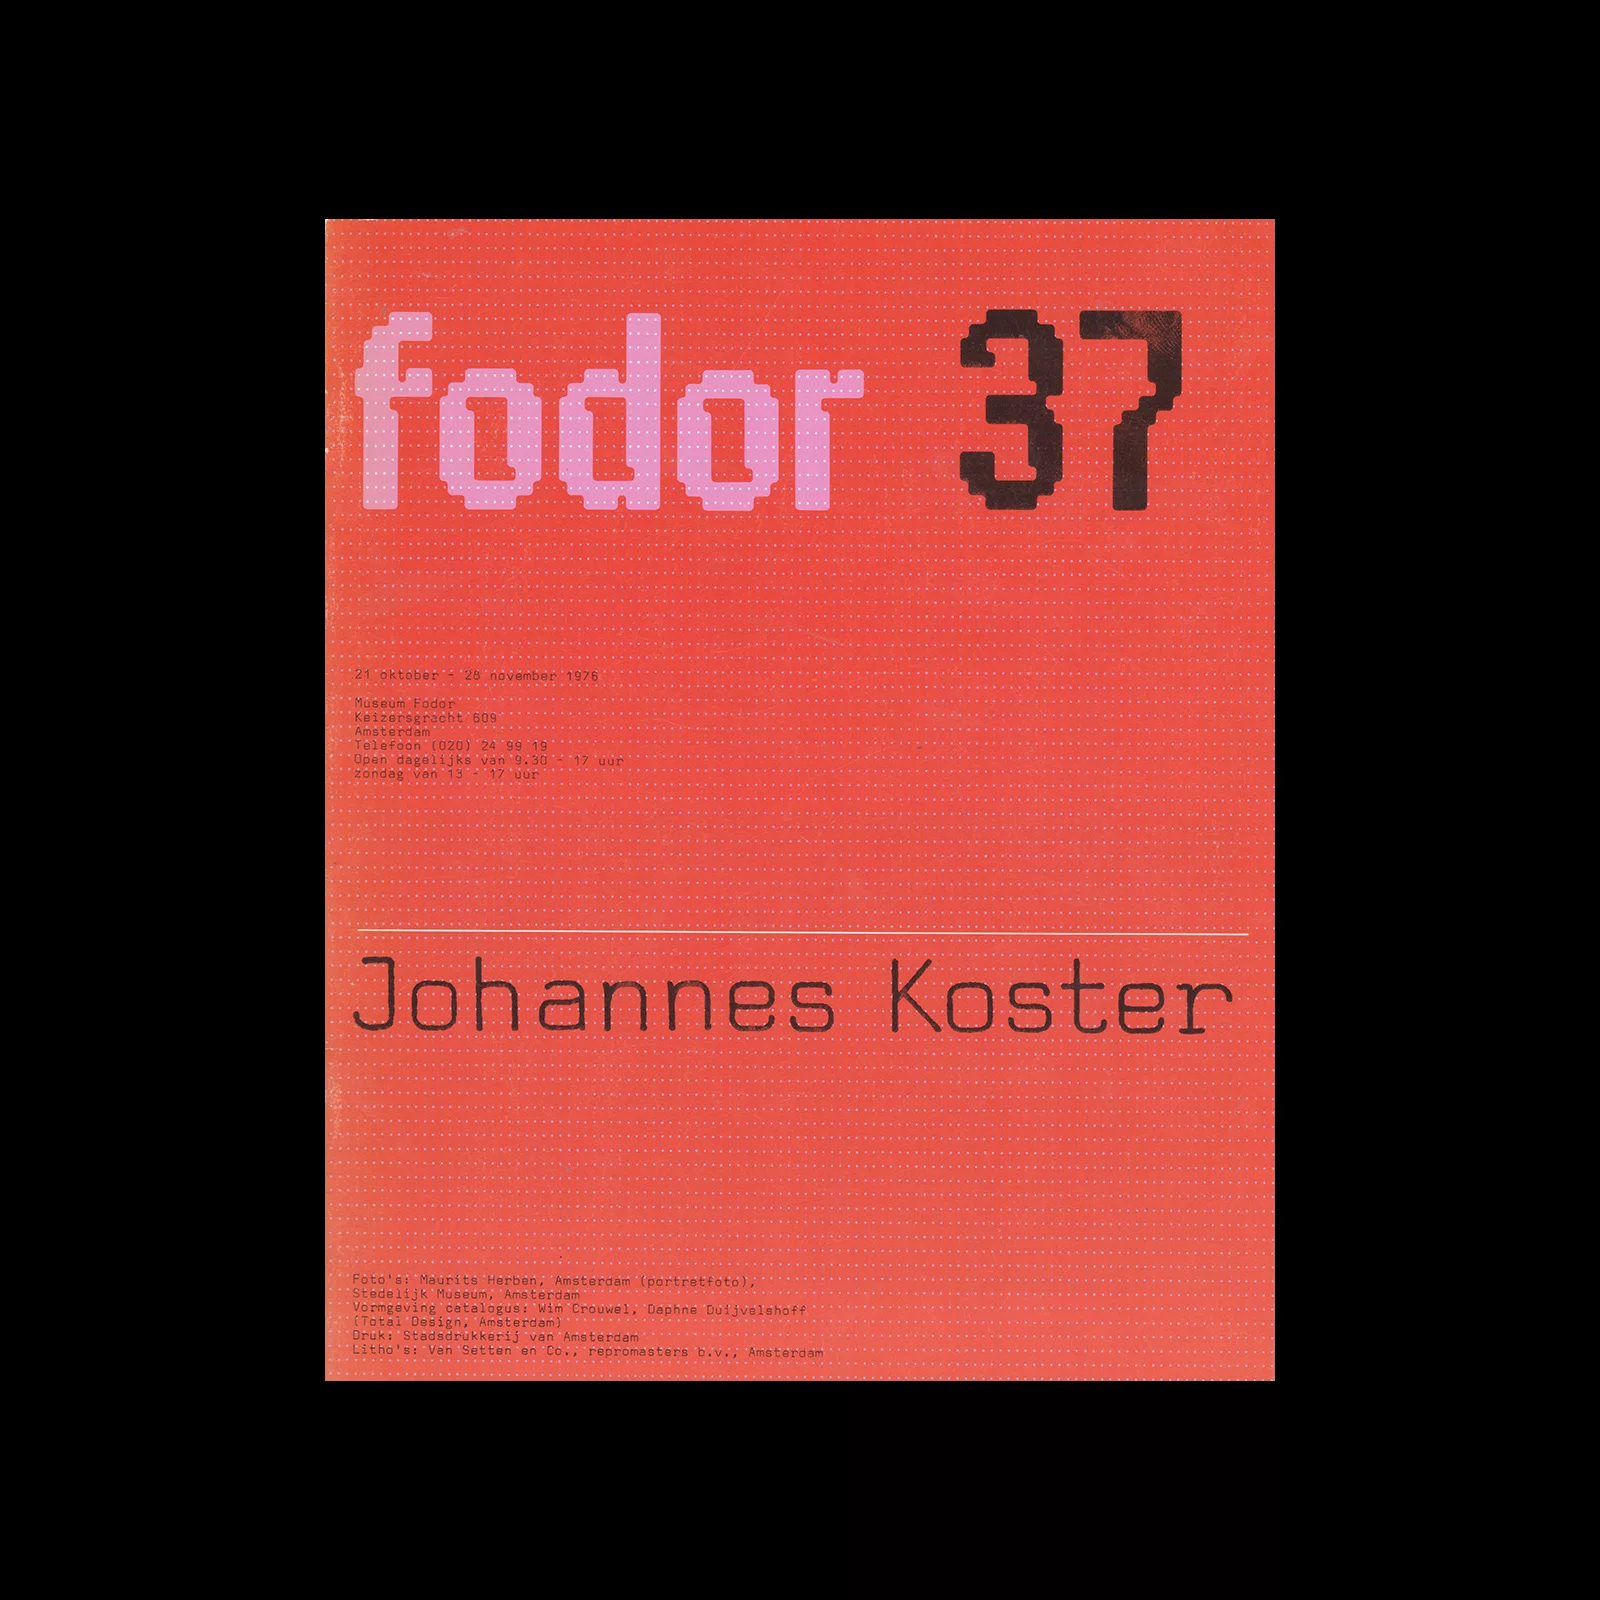 Fodor 37, 1976 - Johannes Koster. Designed by Wim Crouwel and Daphne Duijvelshoff (Total Design)